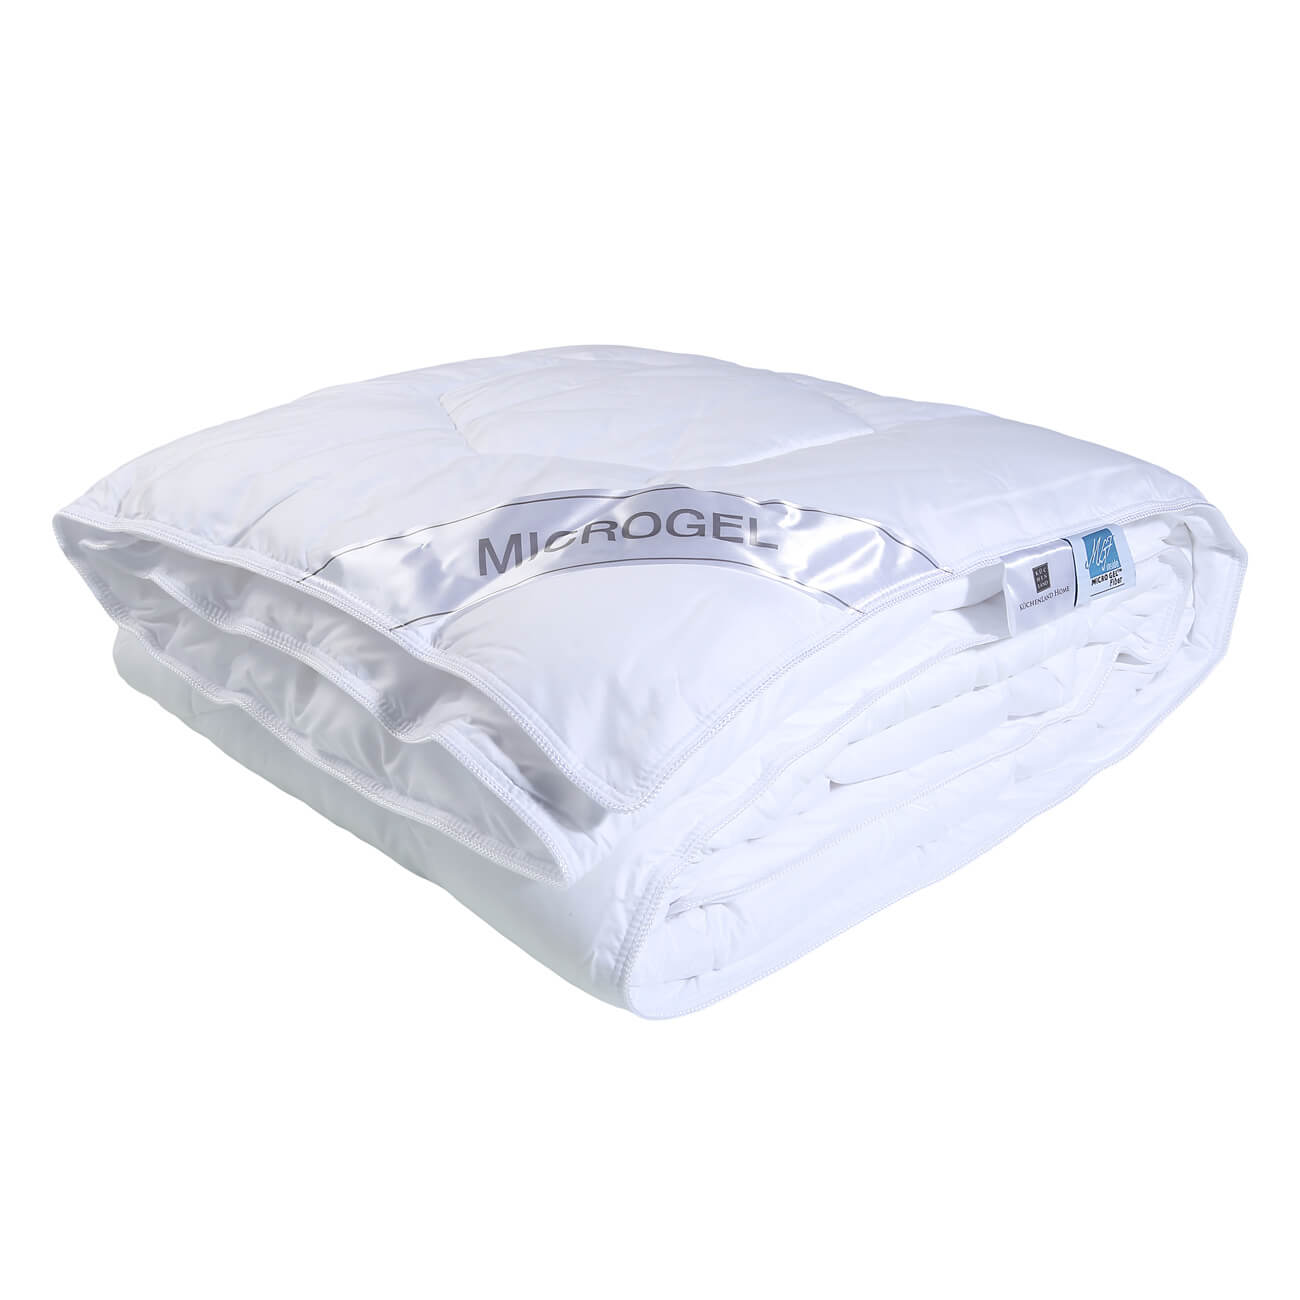 Одеяло, 140х200 см, микрофибра/микрогель, Microgel одеяло огнеупорное теплоизоляционное профикамин 7300x610x13 мм